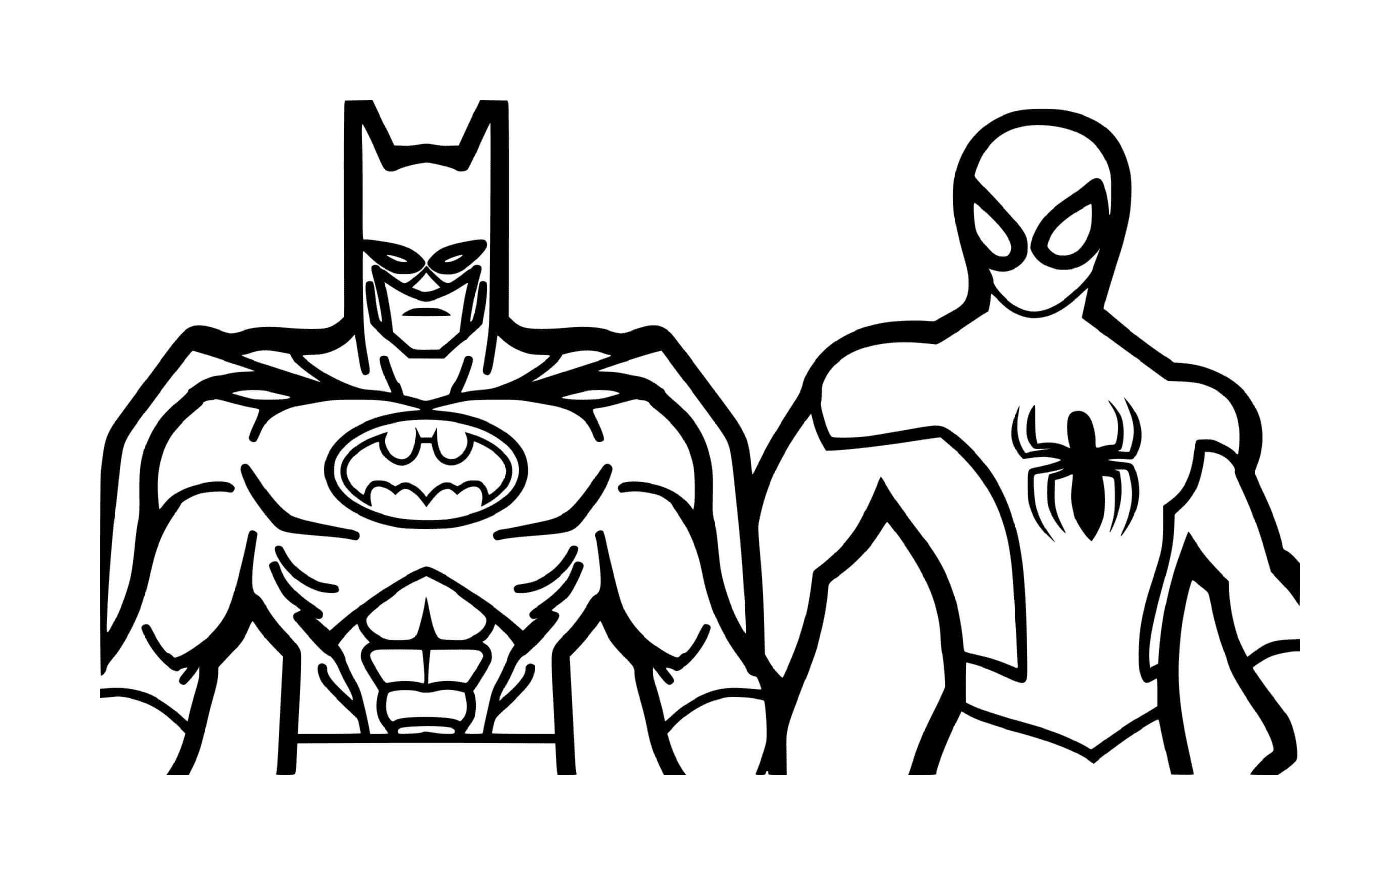  Batman e Spiderman, supereroi 